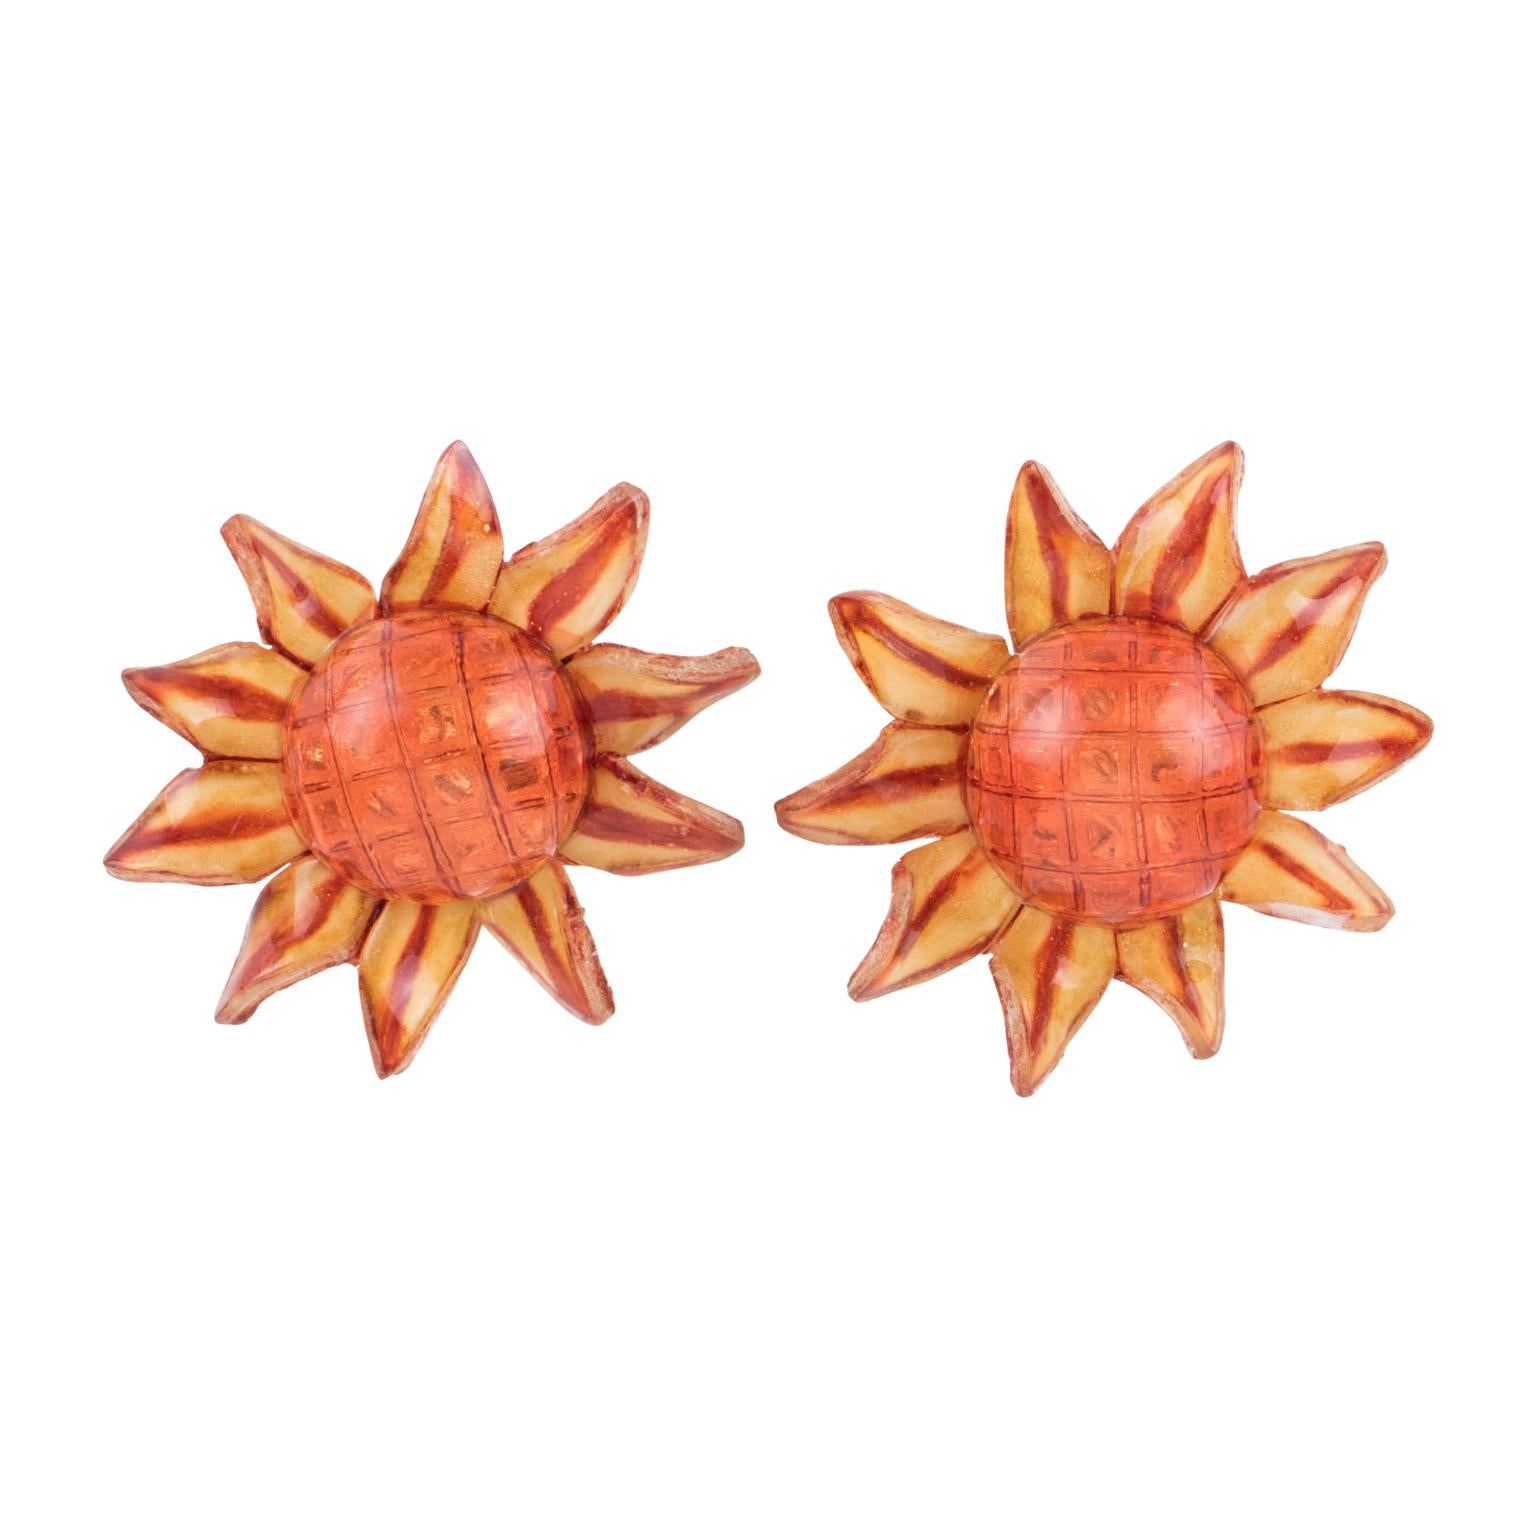 Francoise Montague by Cilea Resin Clip Earrings Orange Daisy Flower For Sale